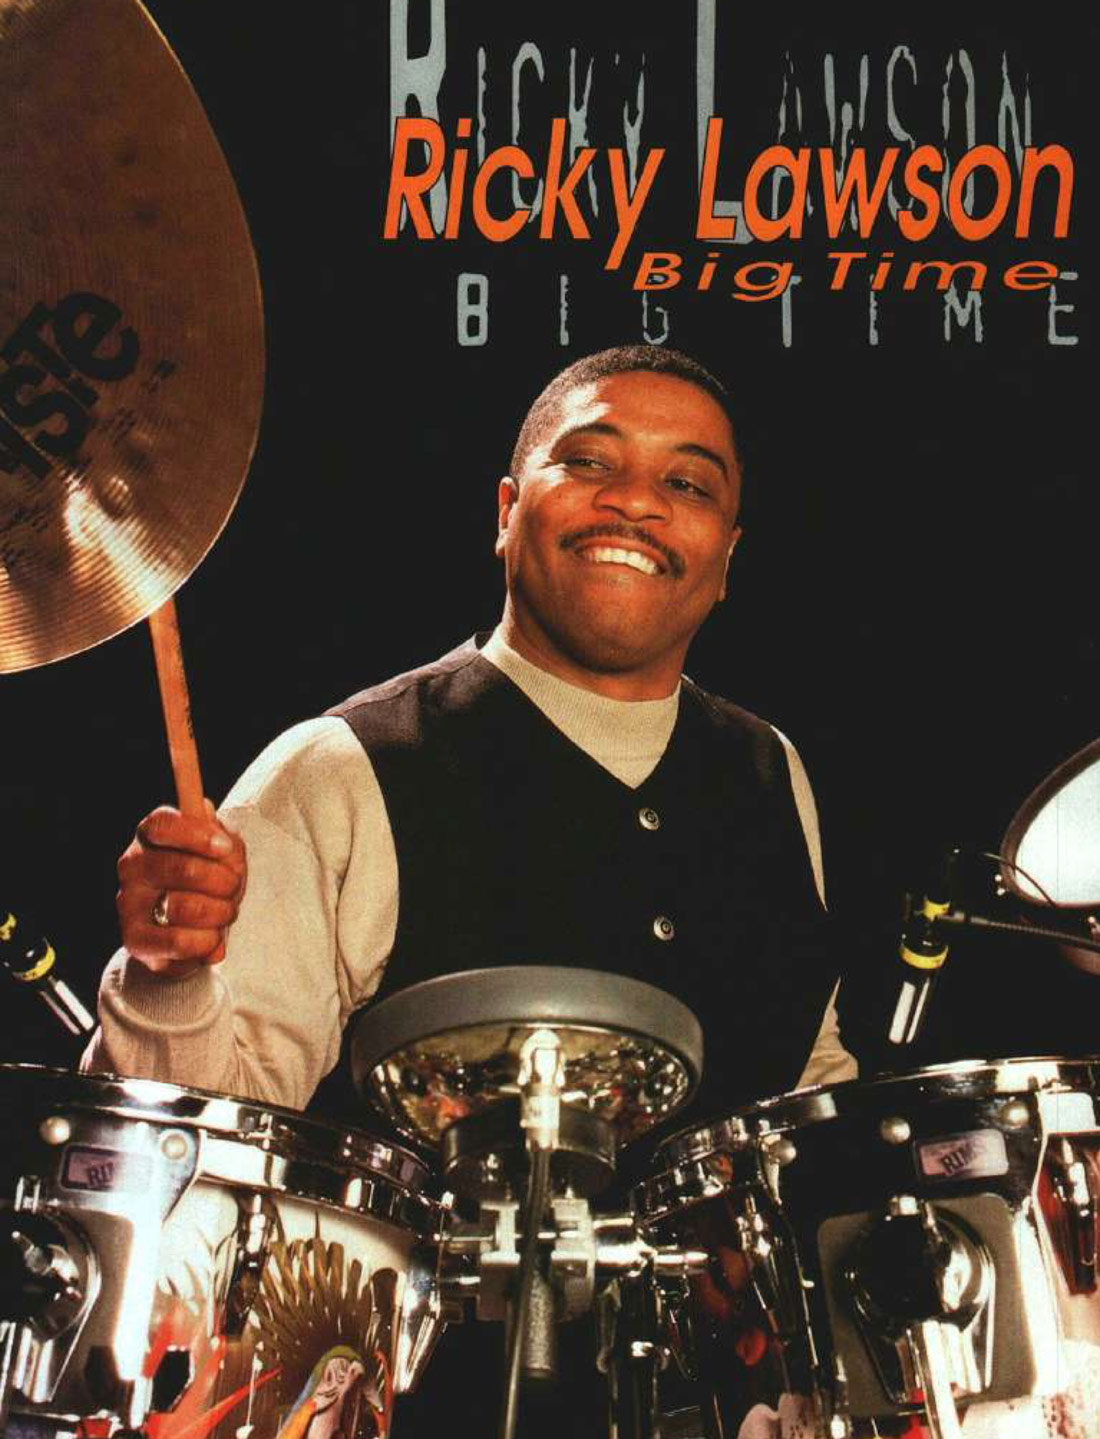 Ricky Lawson - Drummerworld